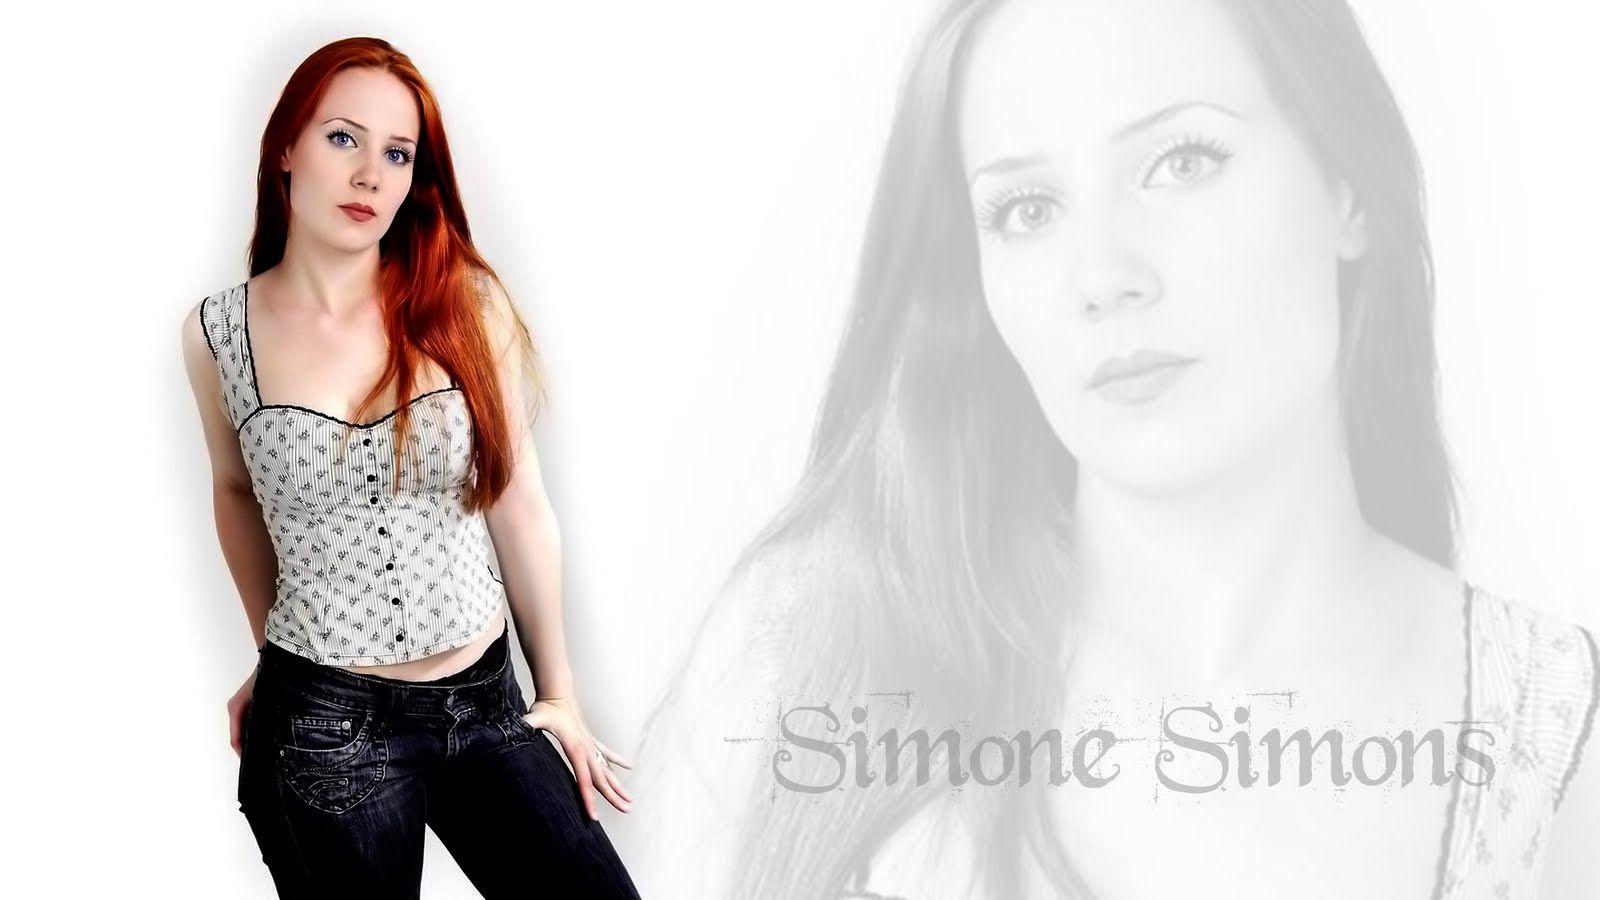 Simone Simons _ Epica Download HD Wallpaper and Free Image